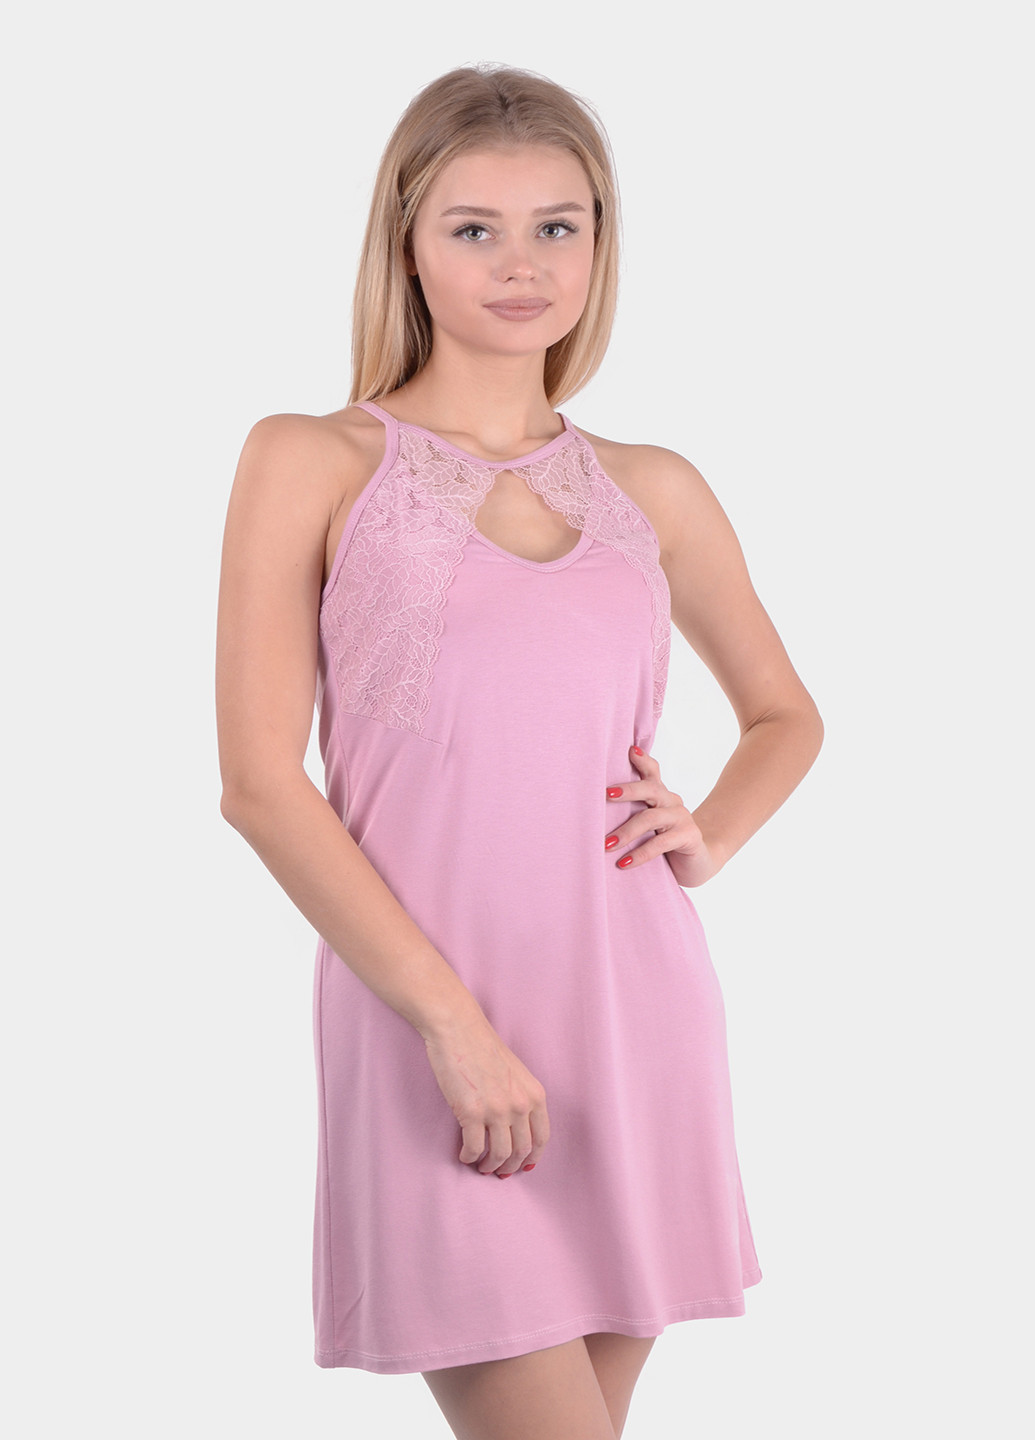 Ночная рубашка NEL однотонная светло-розовая домашняя вискоза